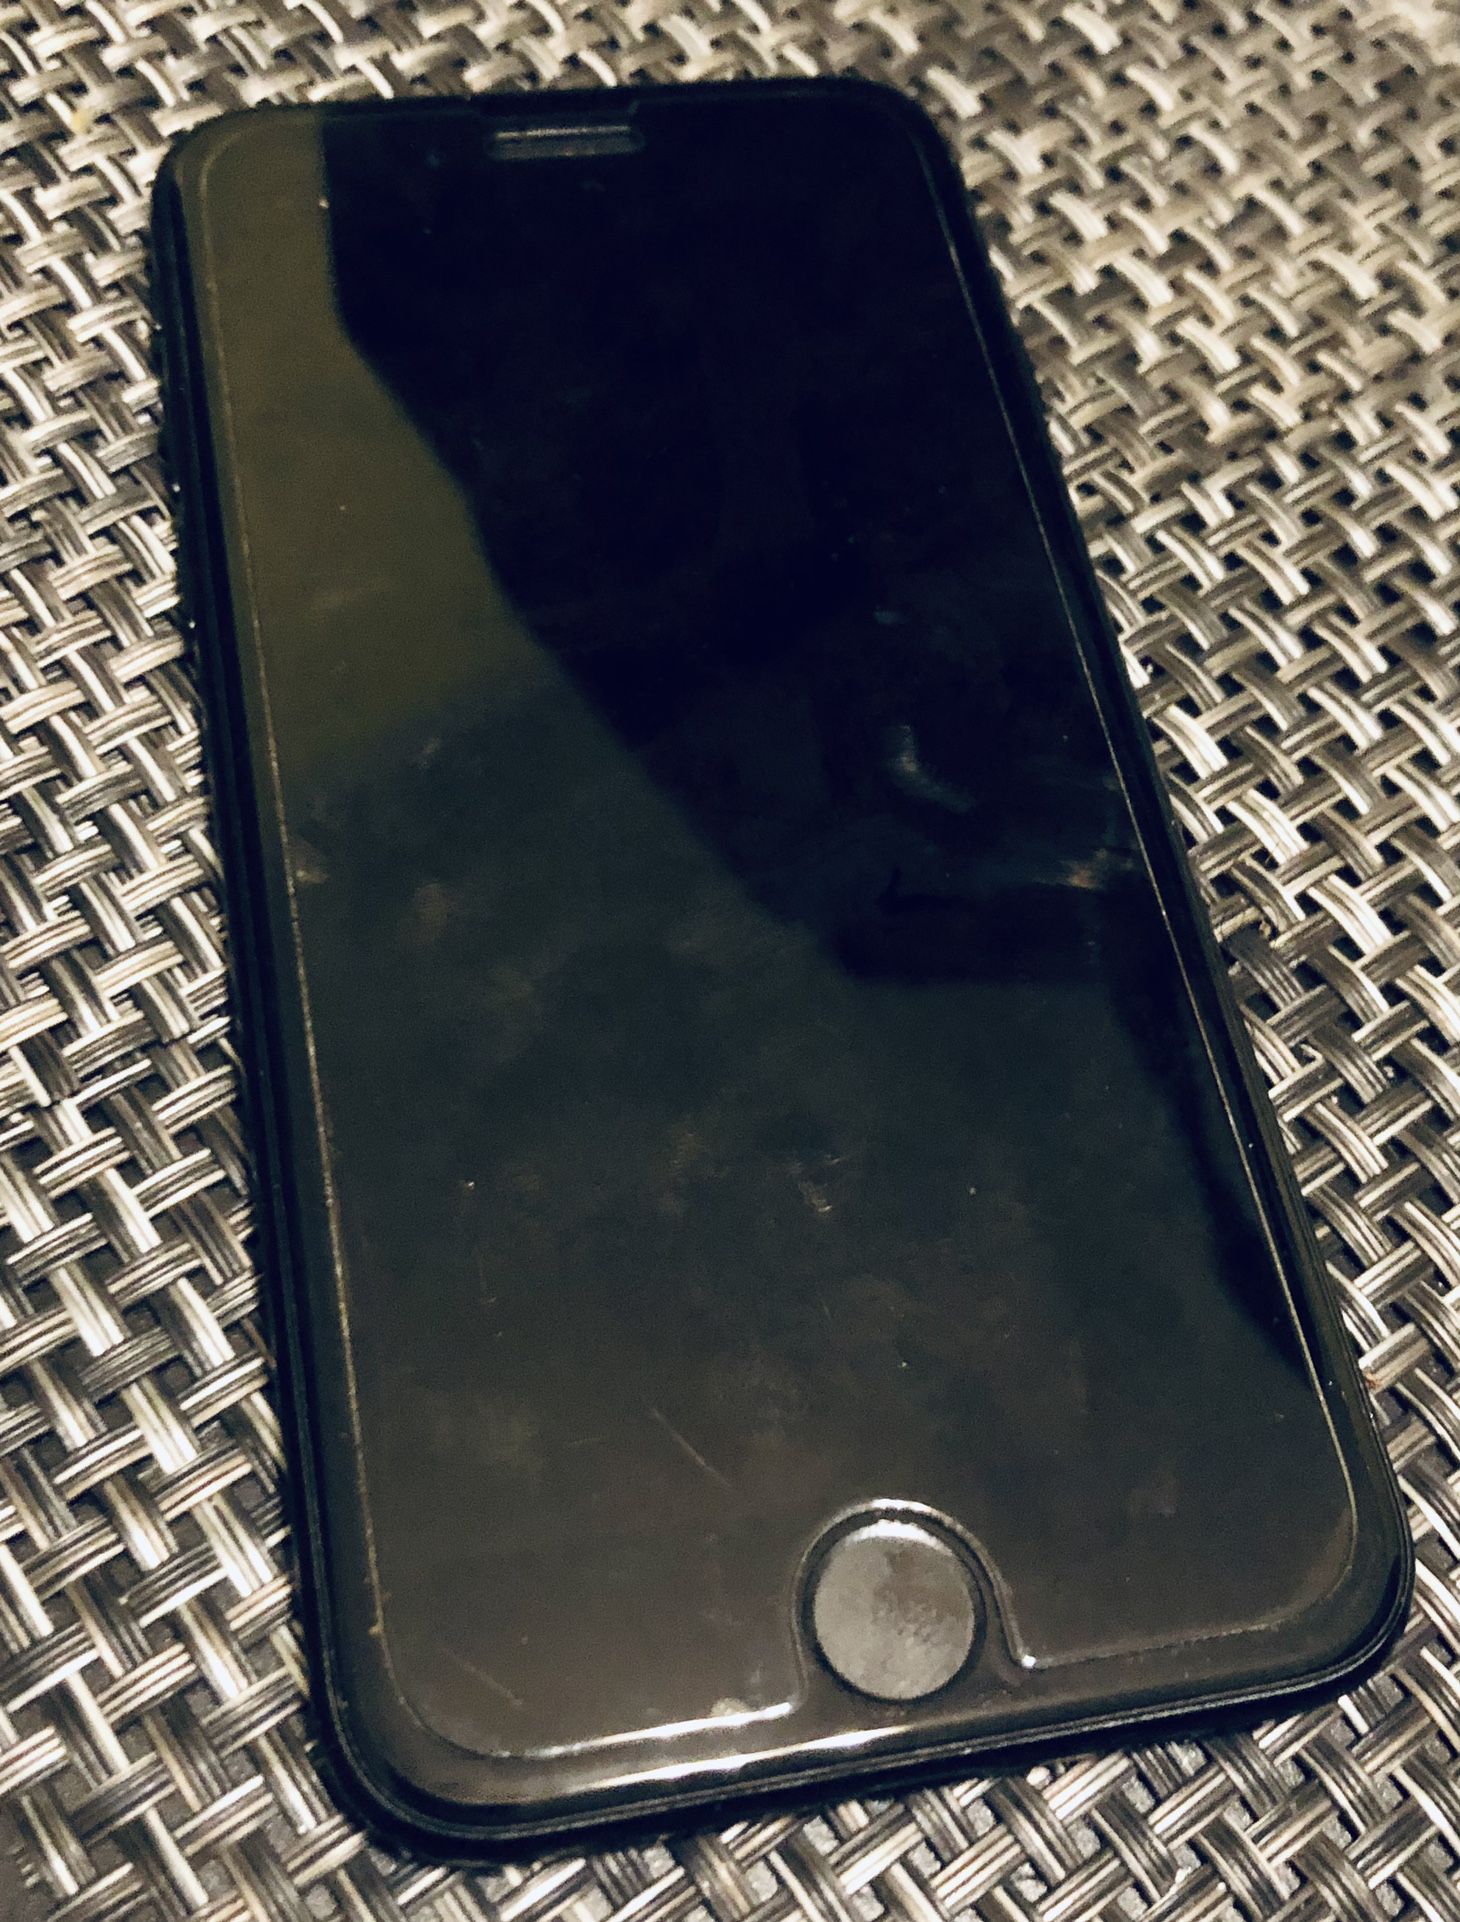 iPhone SE 64 GB - Space Grey - Straight Talk